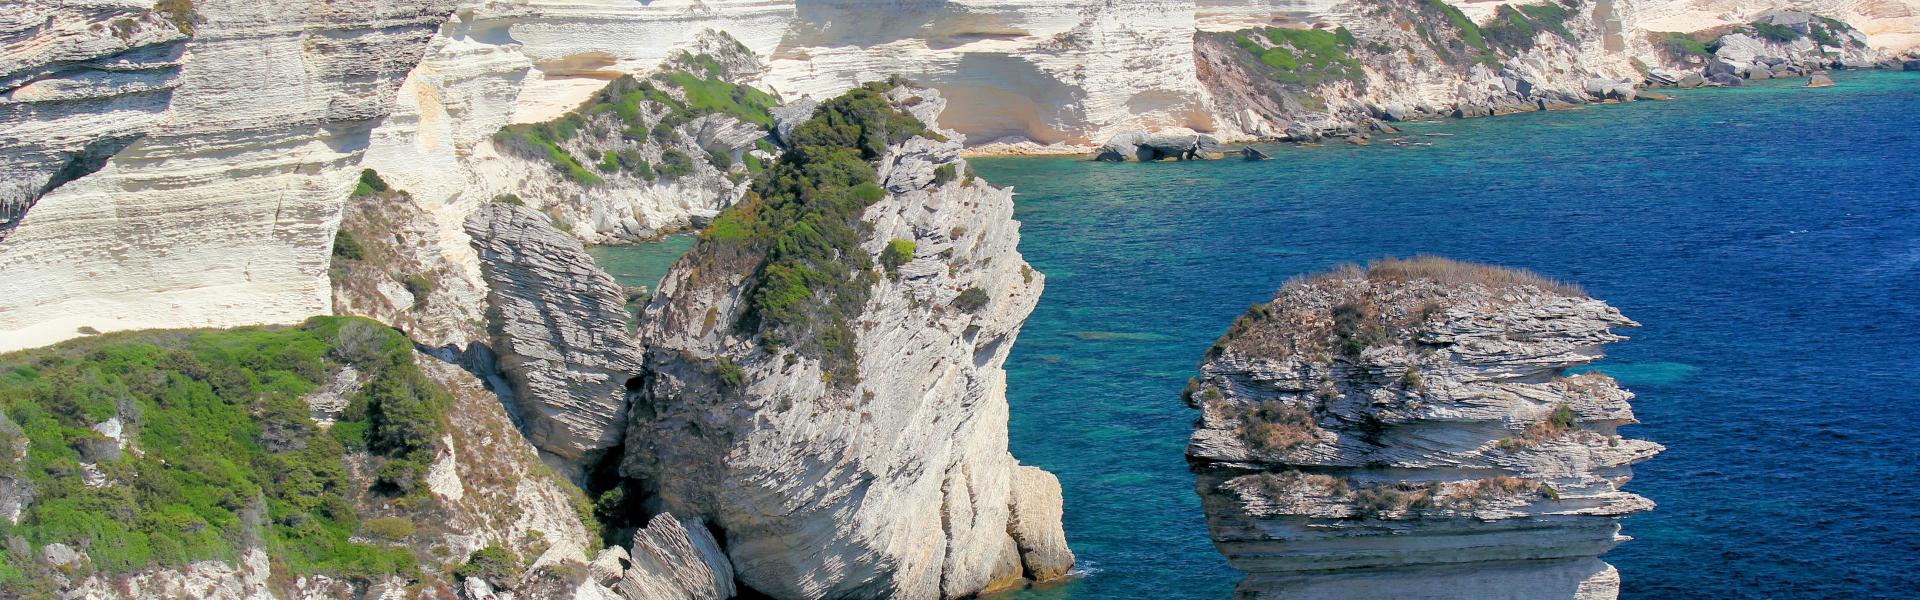 Location de vacances à Pietrosella - Corse-du-Sud - amivac